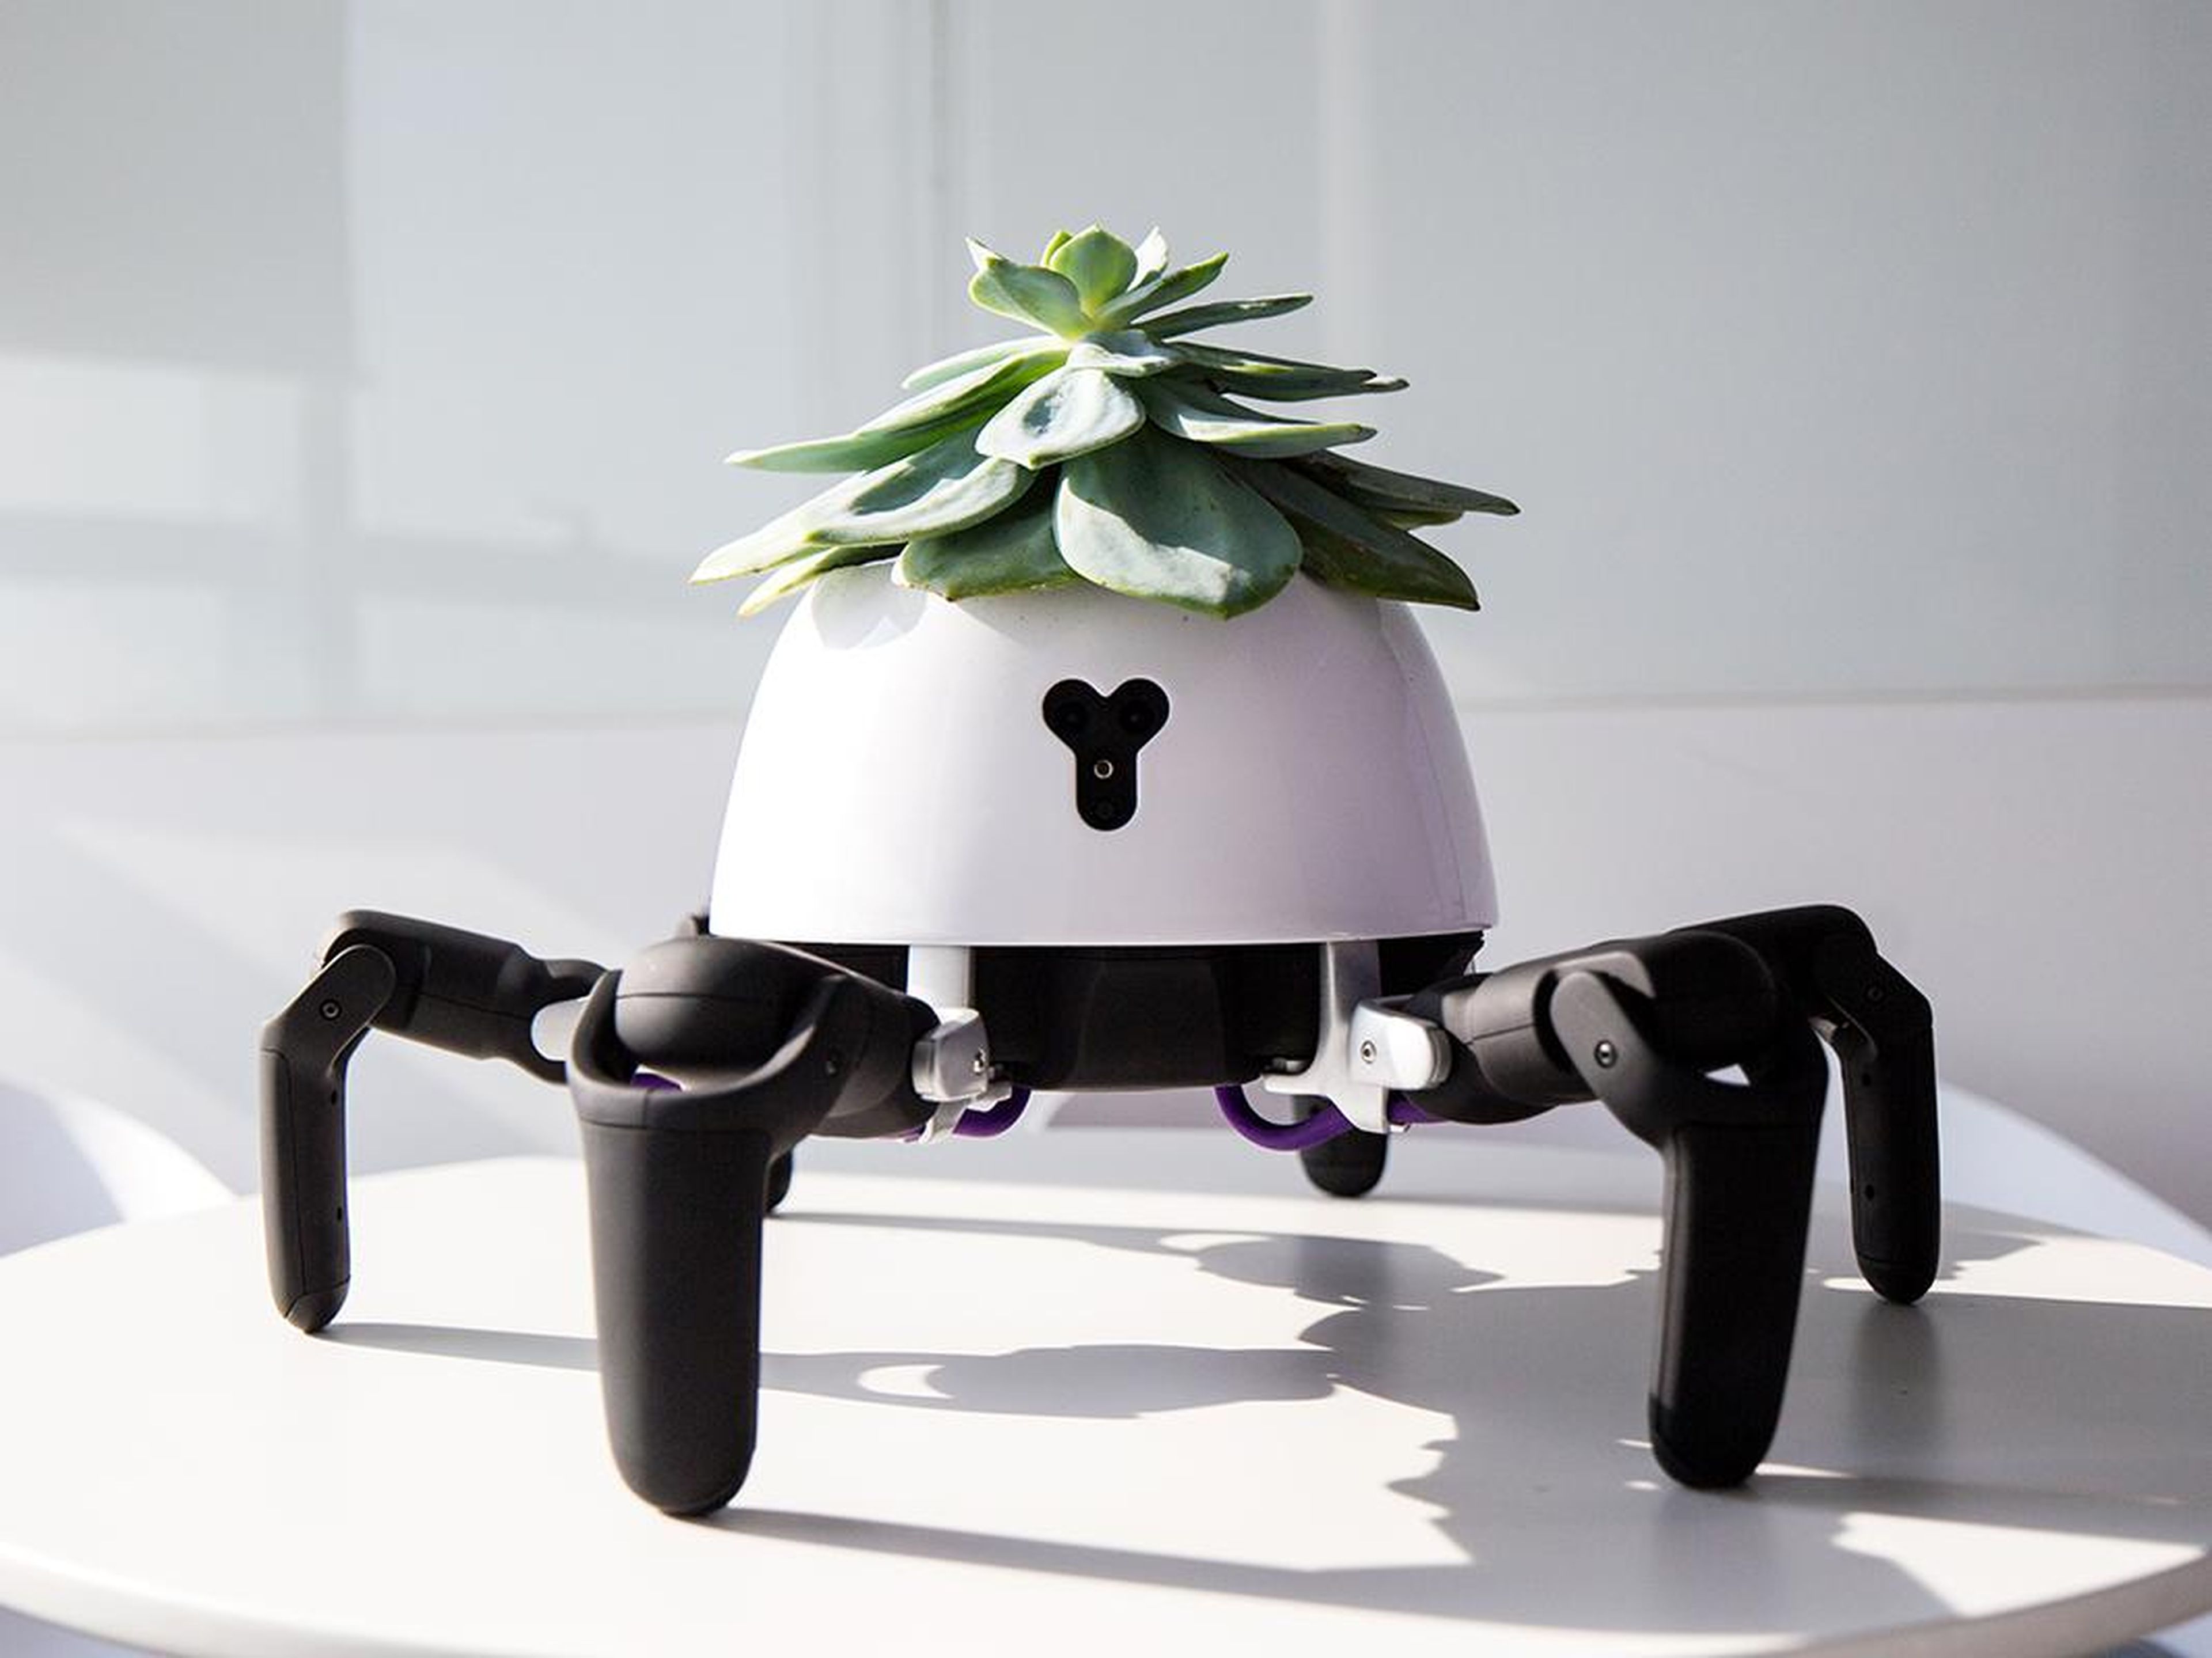 A robotics developer modded HEXA to care for a succulent.